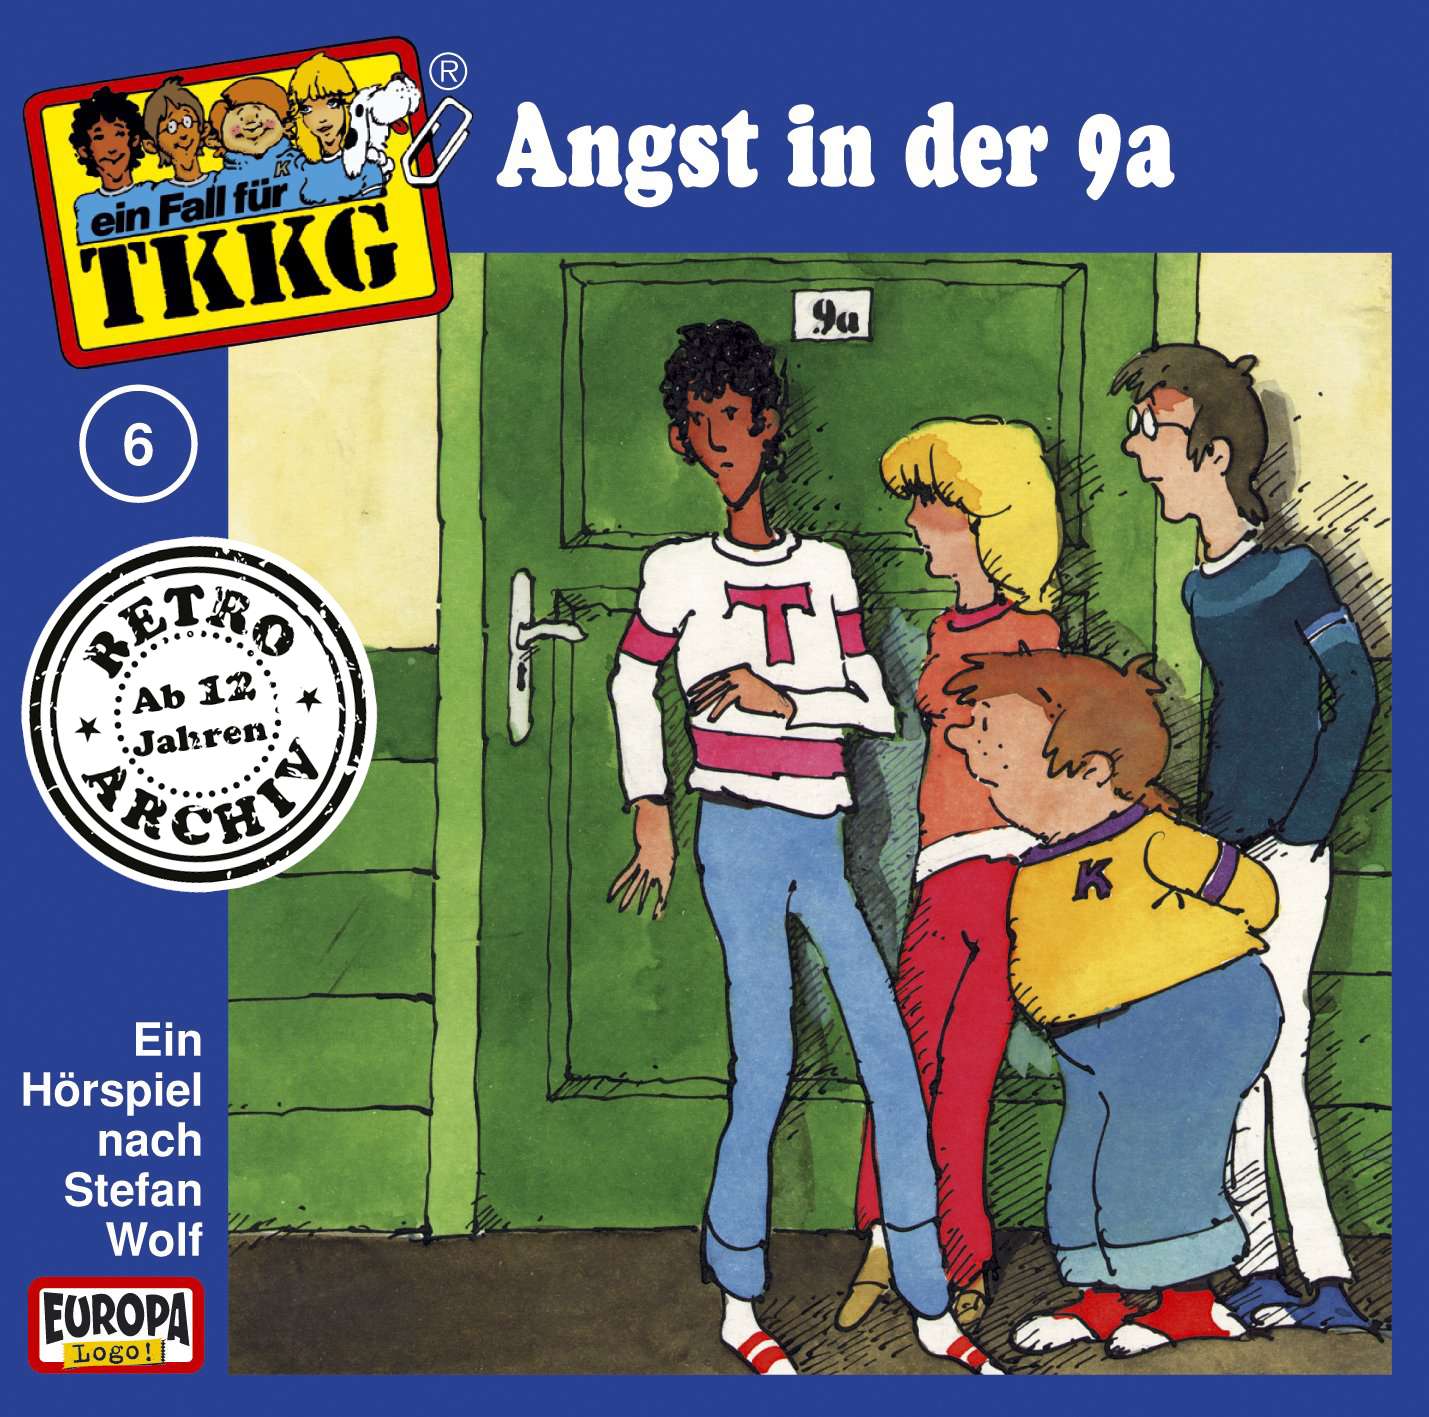 TKKG Retro-Archiv - Angst in der 9a